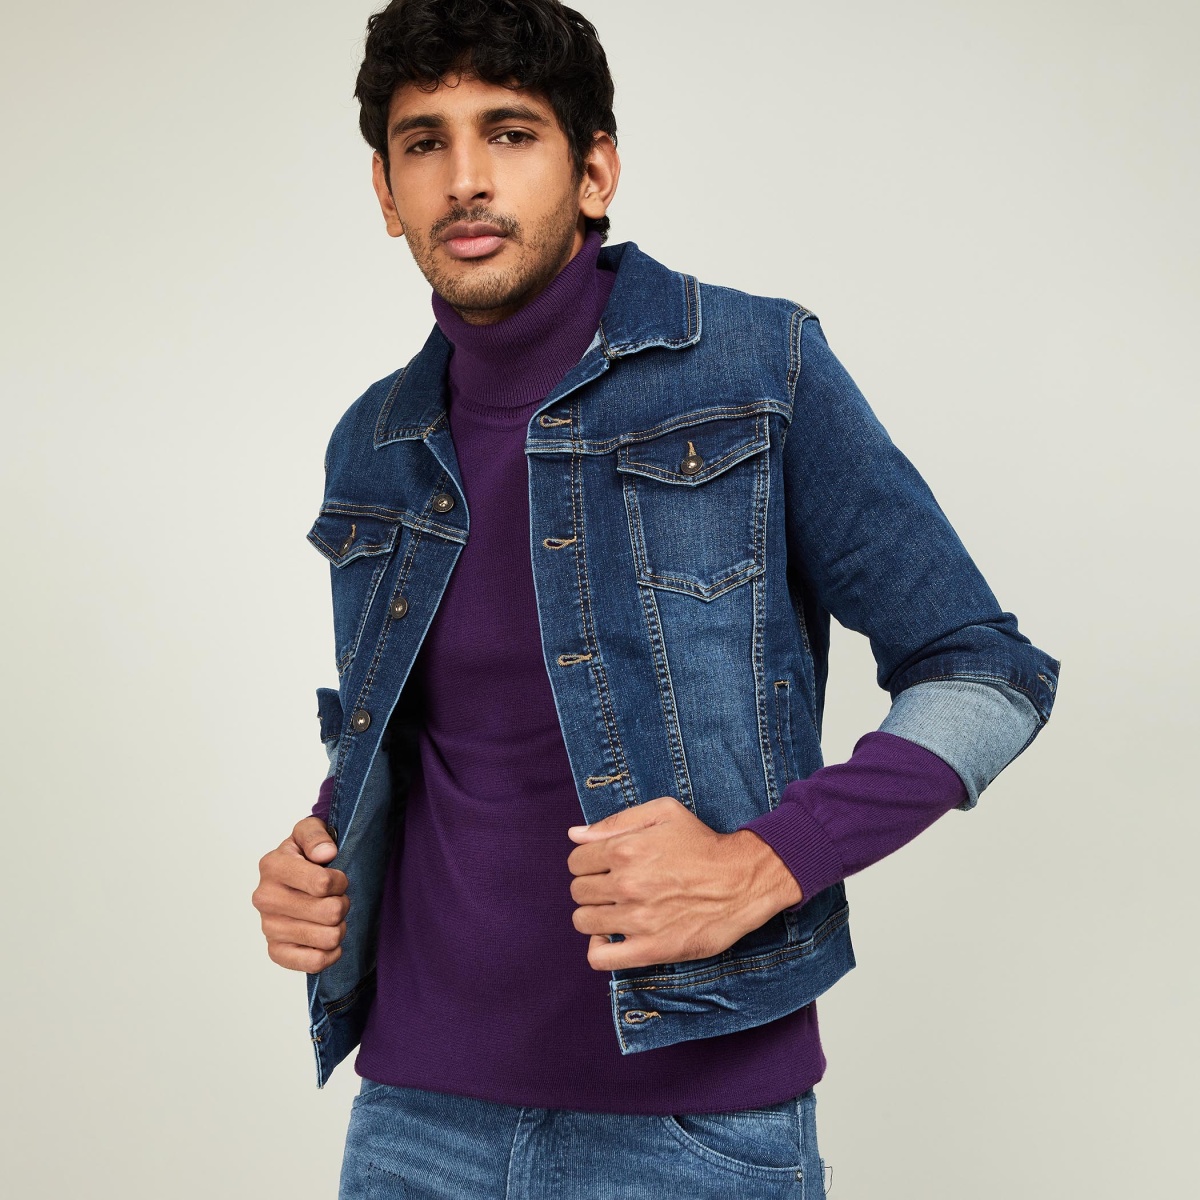 Reveal more than 184 pepe jeans denim jacket super hot